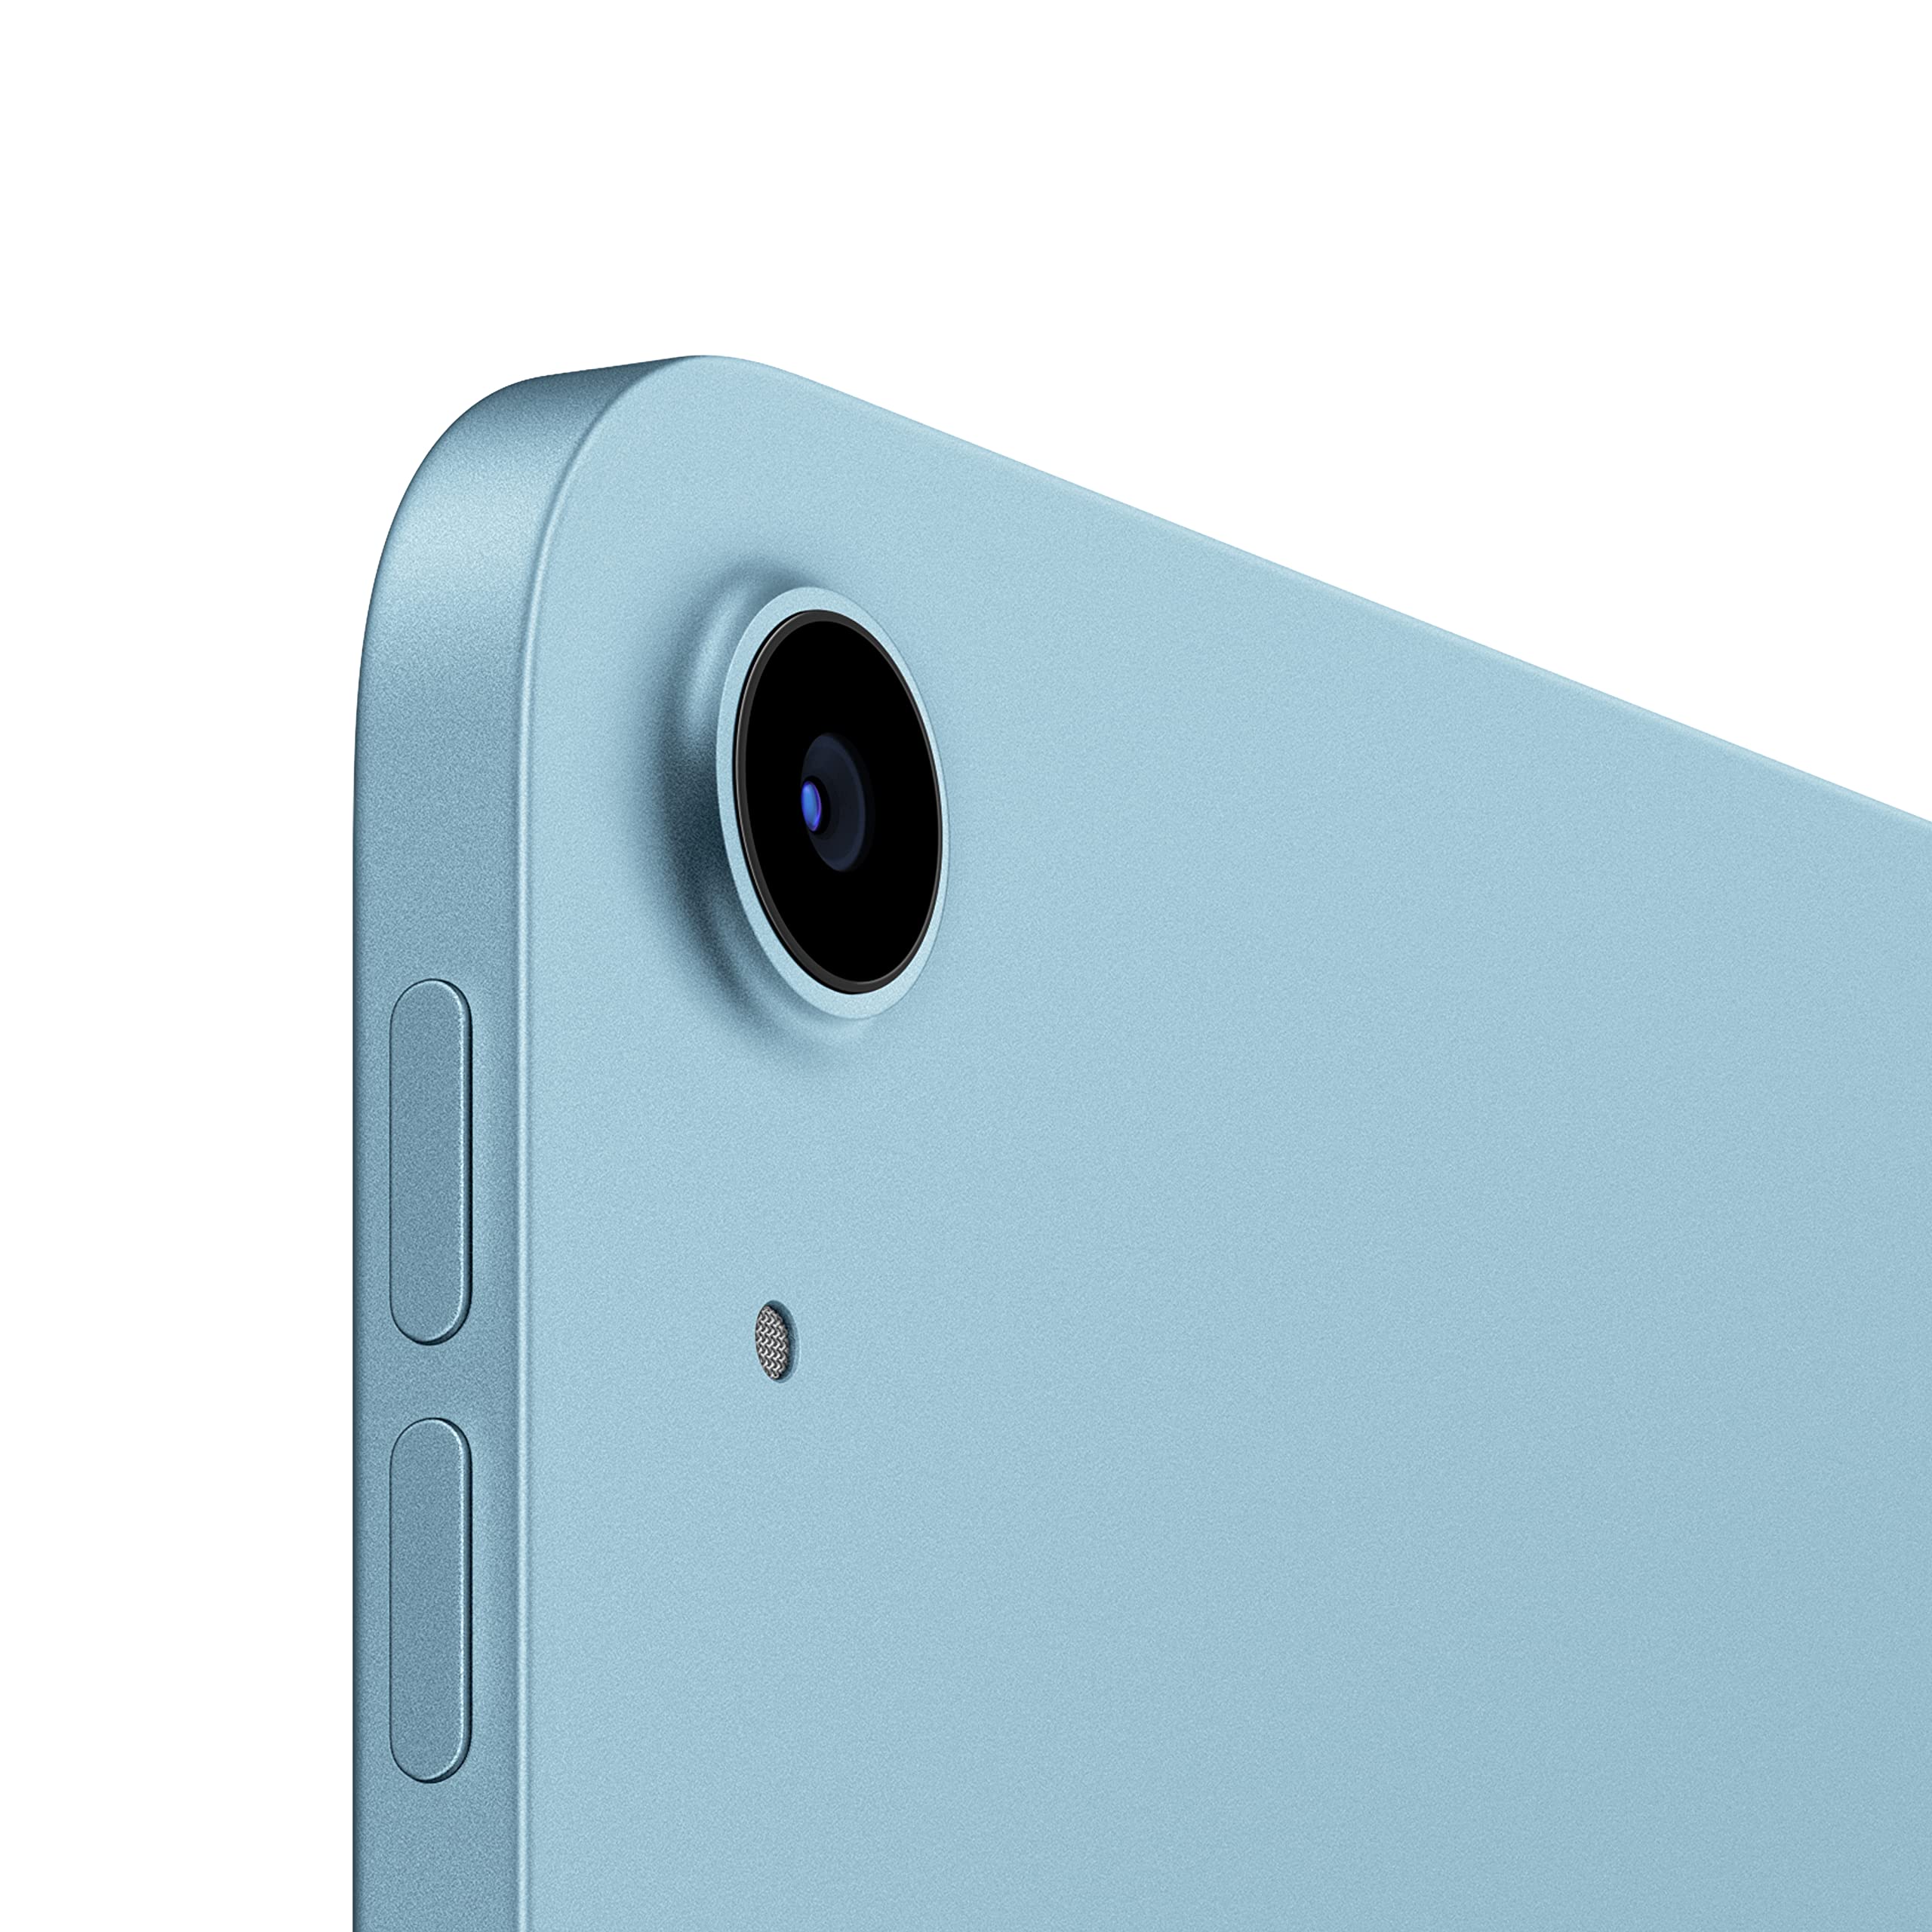 2022 Apple 10.9-inch iPad Air (Wi-Fi, 256GB) - Blue (5th Generation)